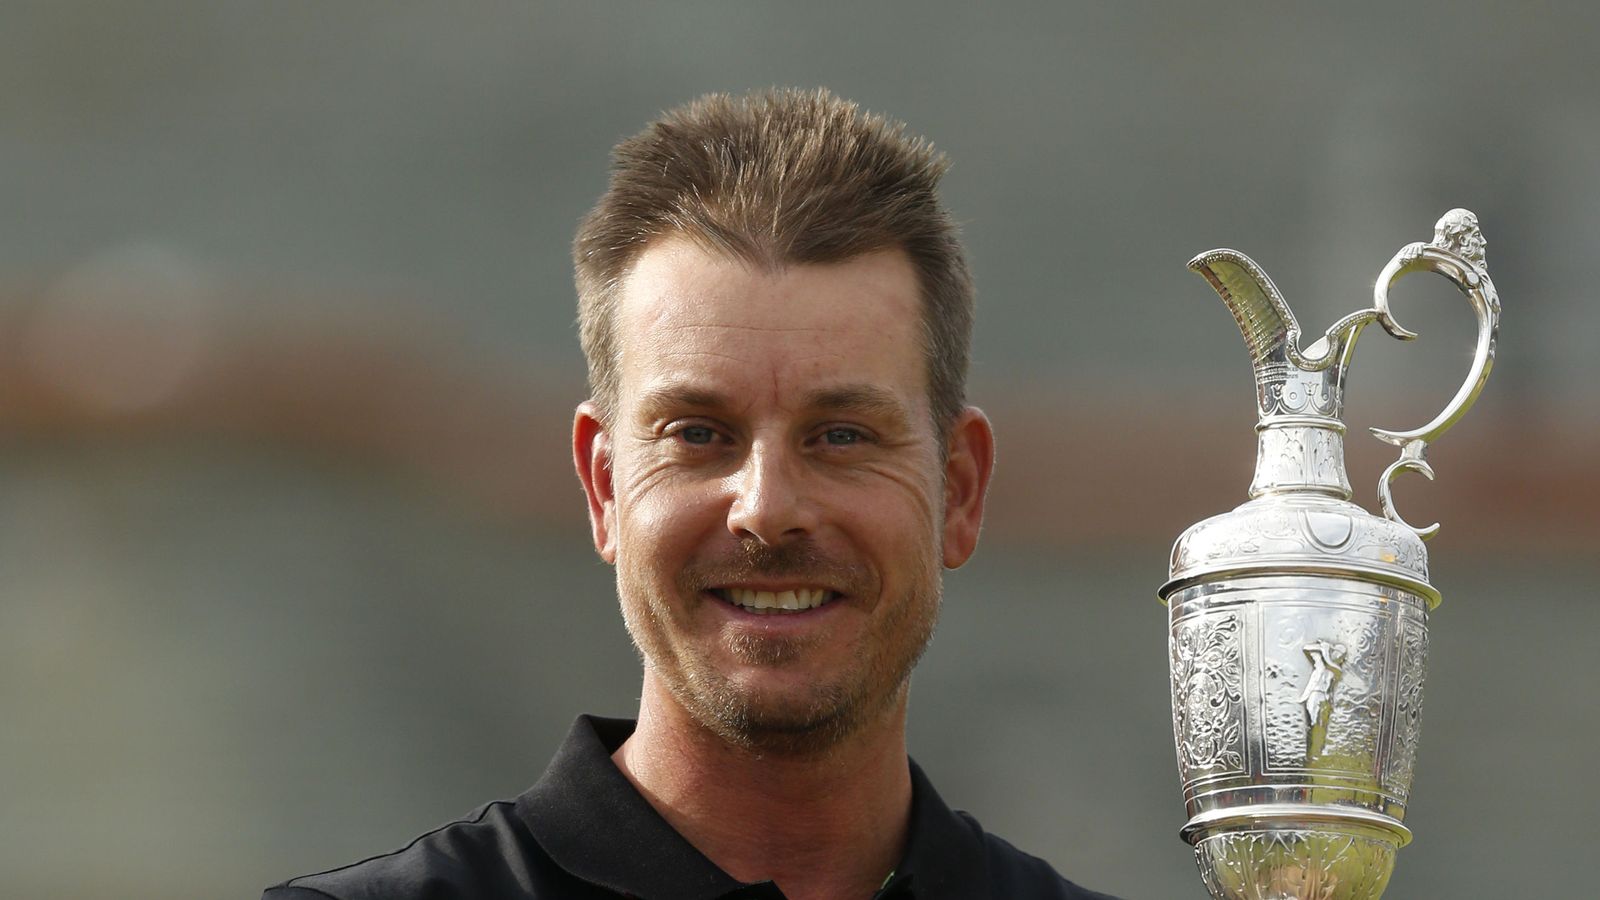 The Open Henrik Stenson On Life As Open Champion Golf News Sky Sports